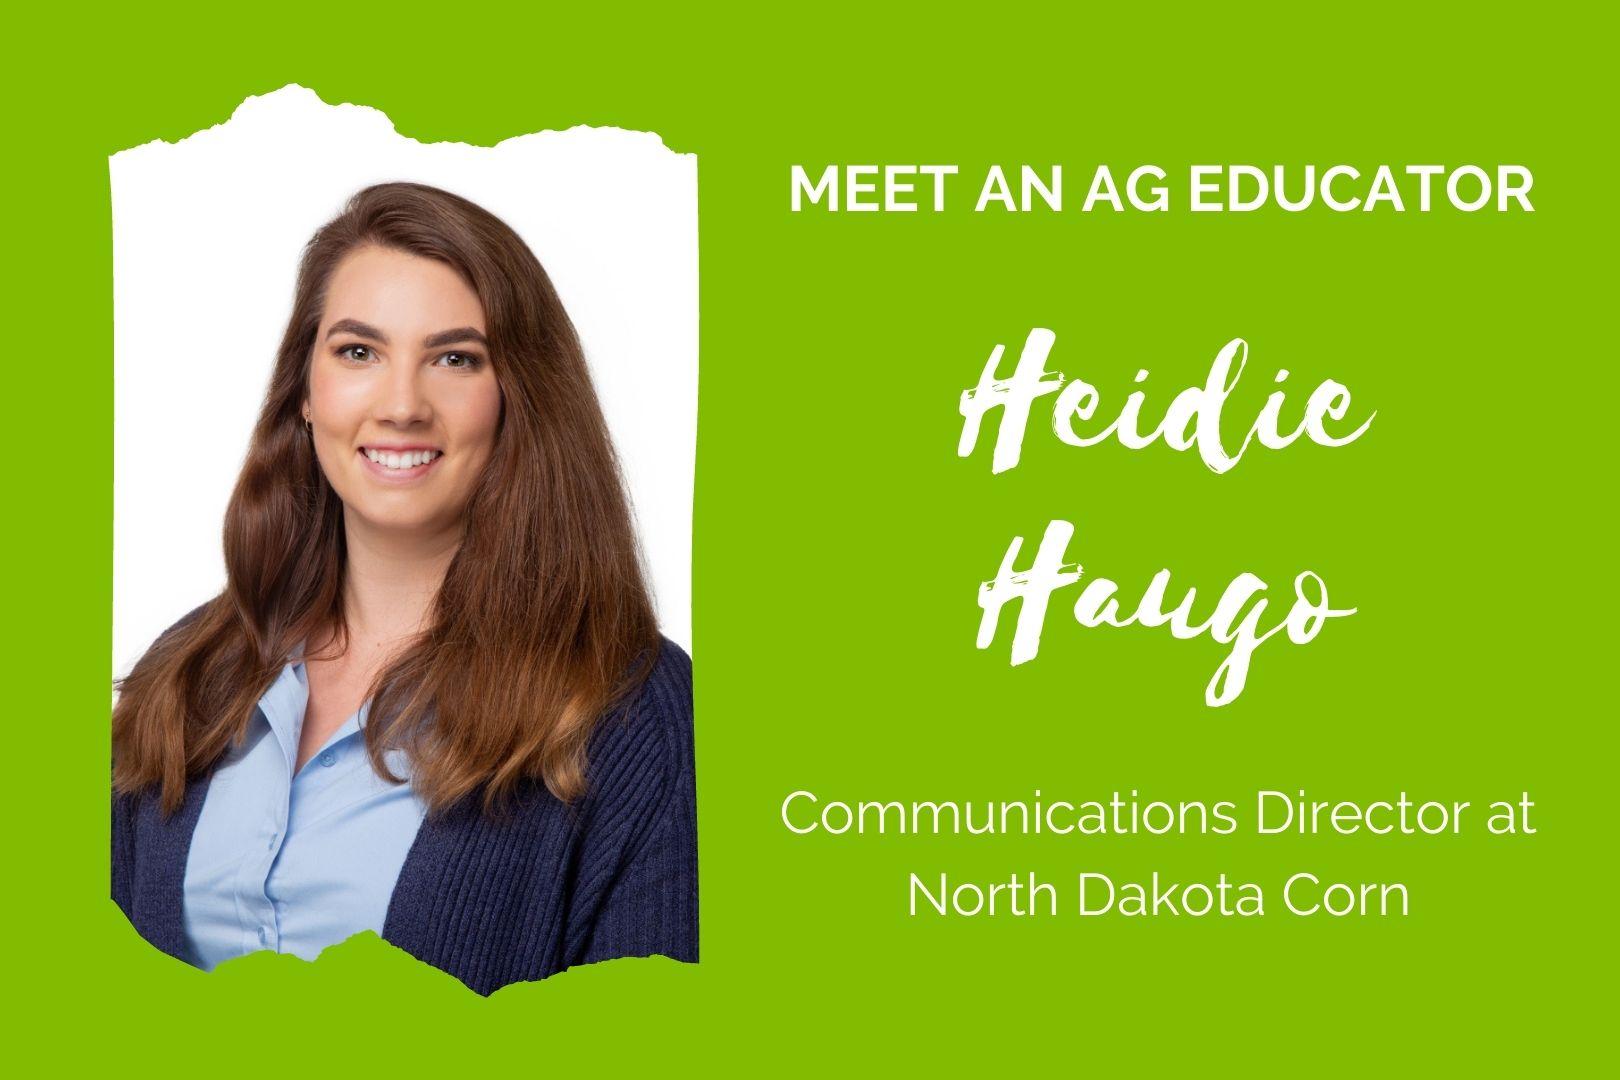 Lime green graphic. Text reads, "Meet an ag educator! Heidie Haugo, Communications Director at North Dakota Corn."